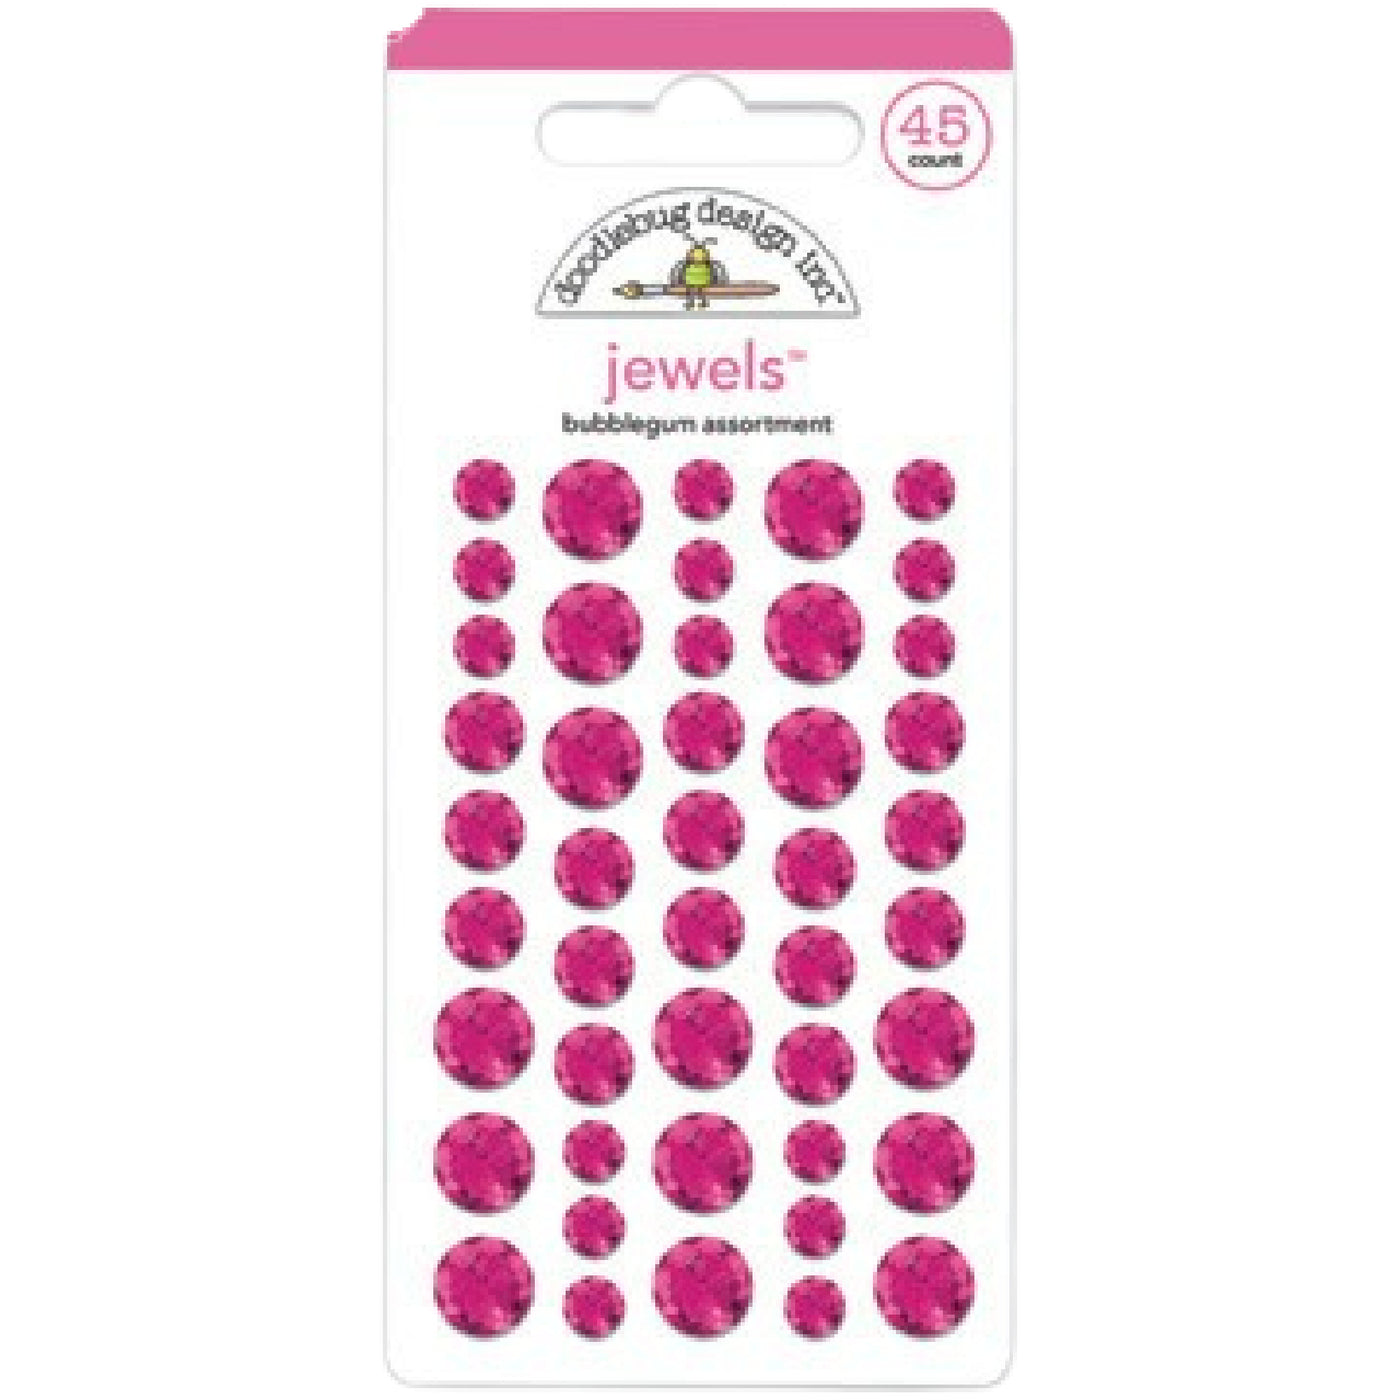 45 dark pink, or taffy, rhinestone stickers in three sizes